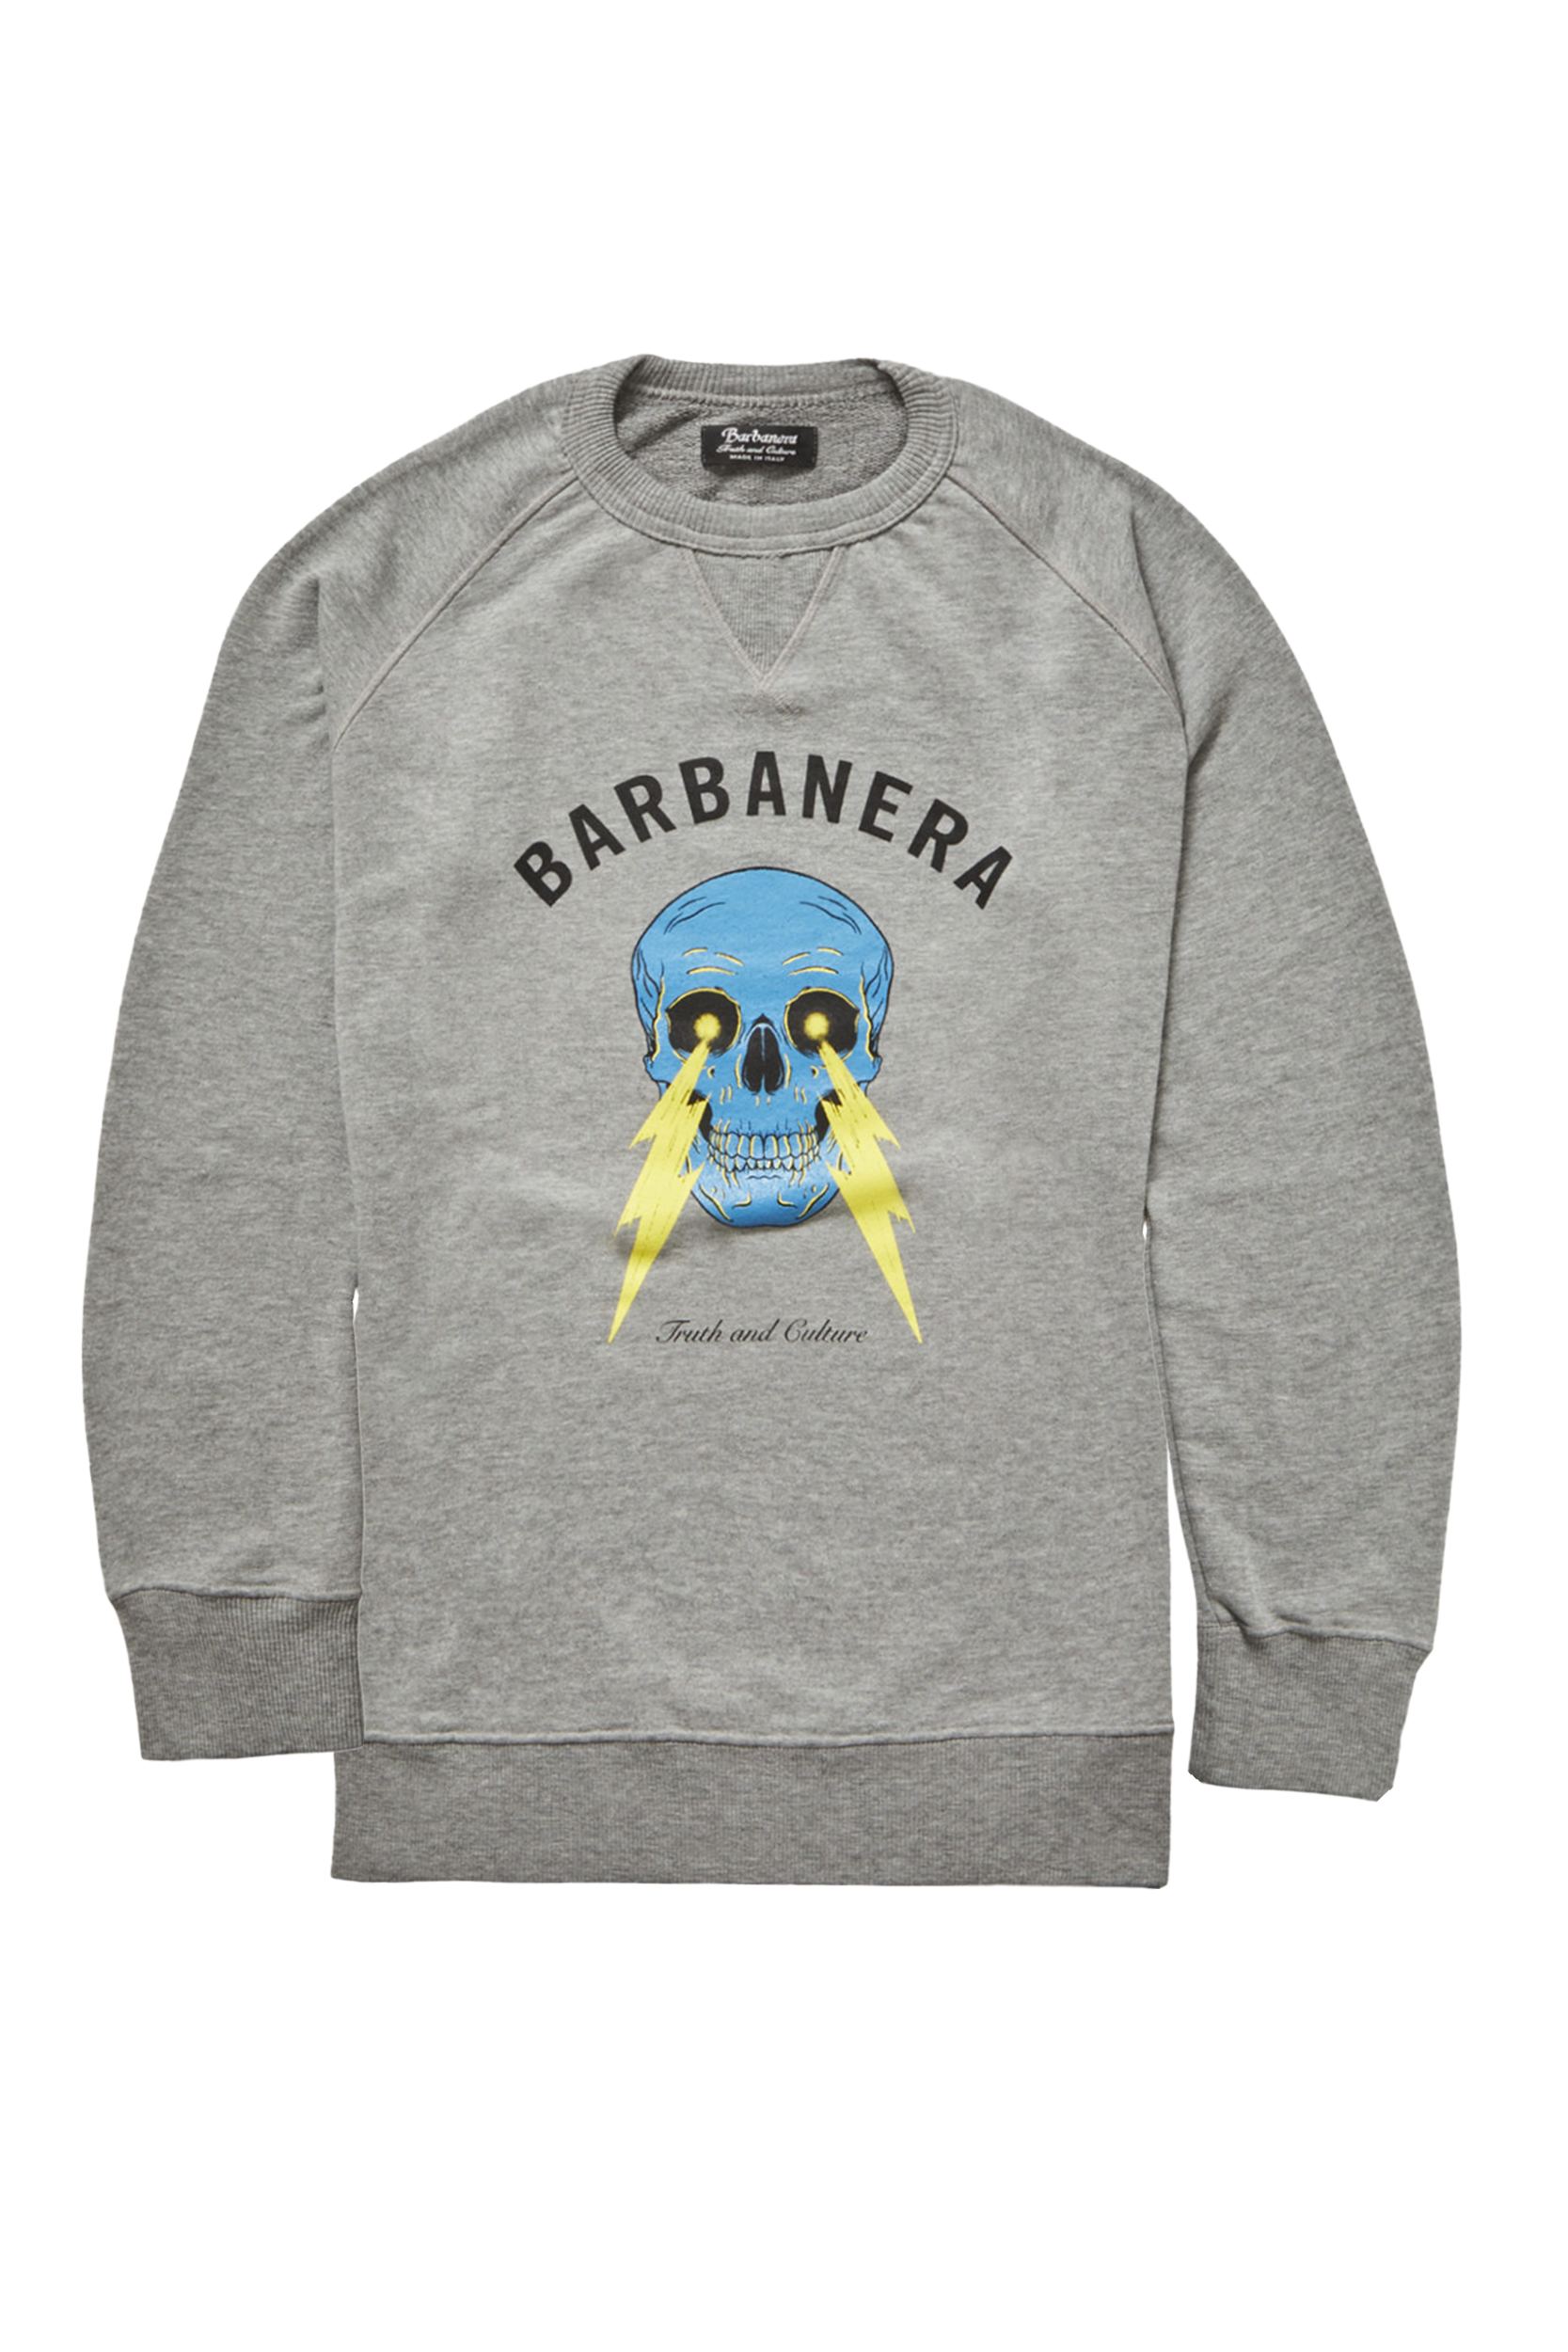 Crew - Melange Skull Graphic Barbanera Neck Grey Sweatshirt Bolt Cotton And Meroni Lightning